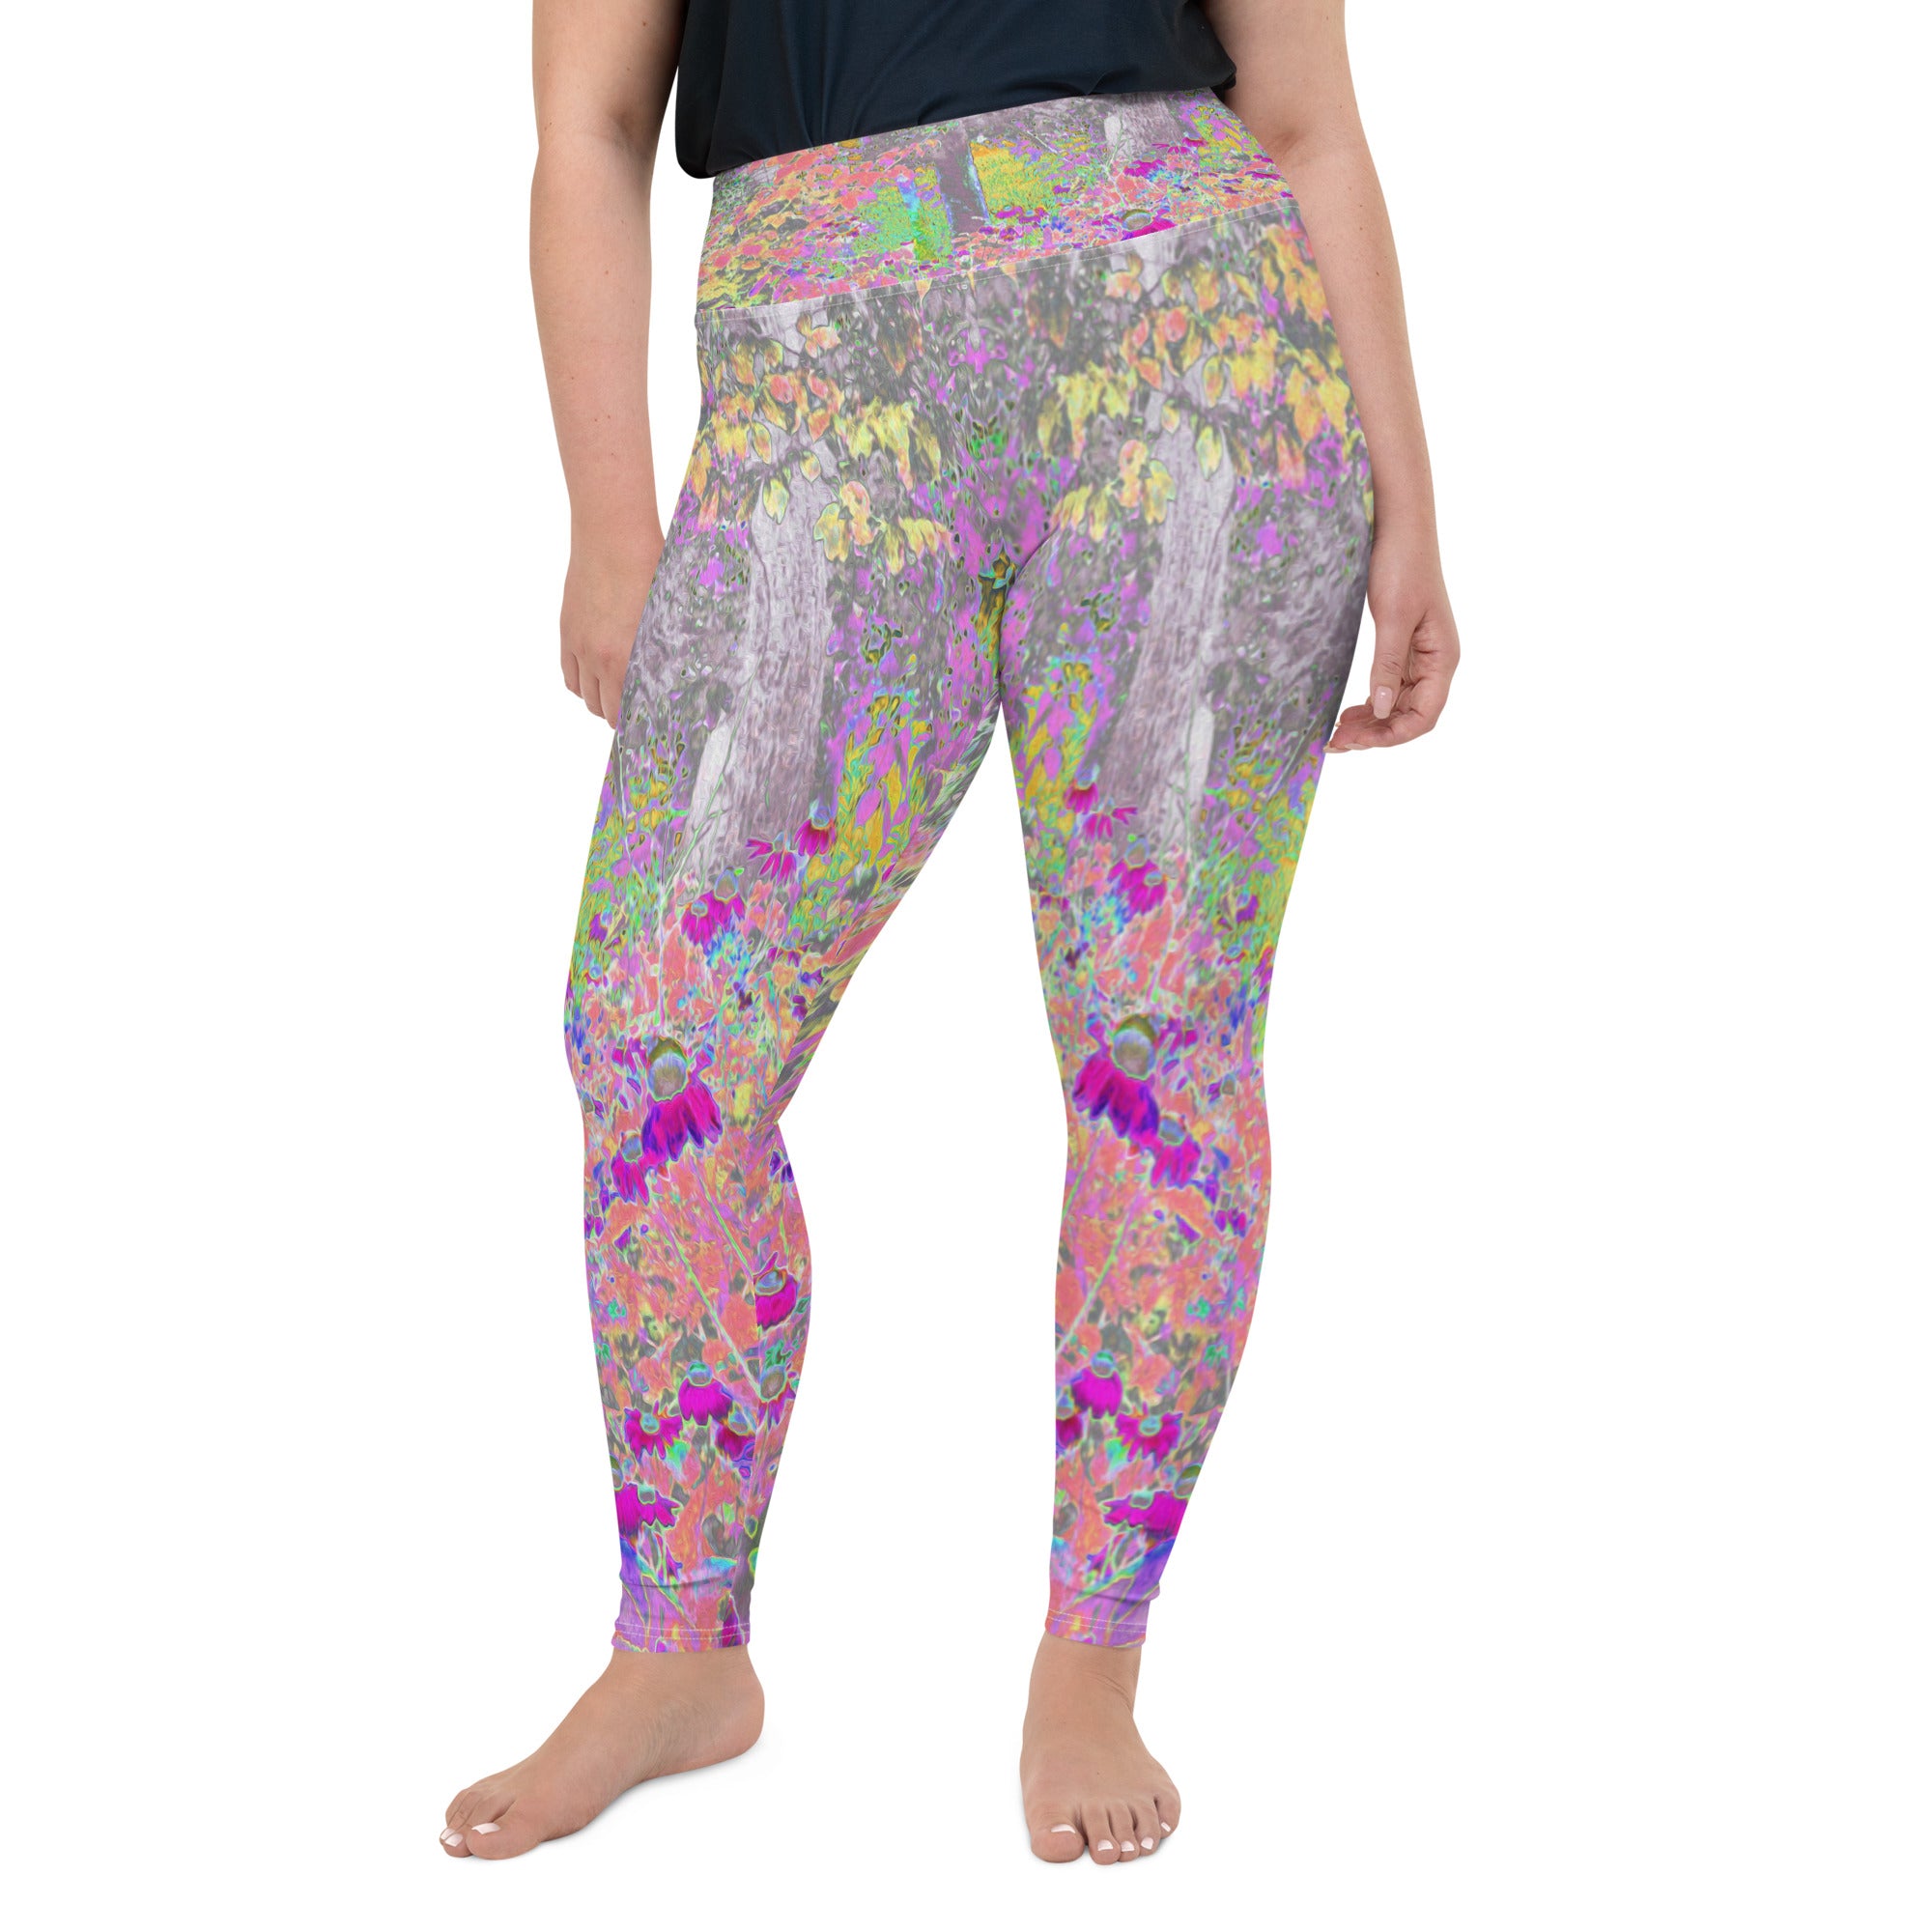 Plus Size Leggings for Women, Watercolor Garden Sunrise with Purple Flowers